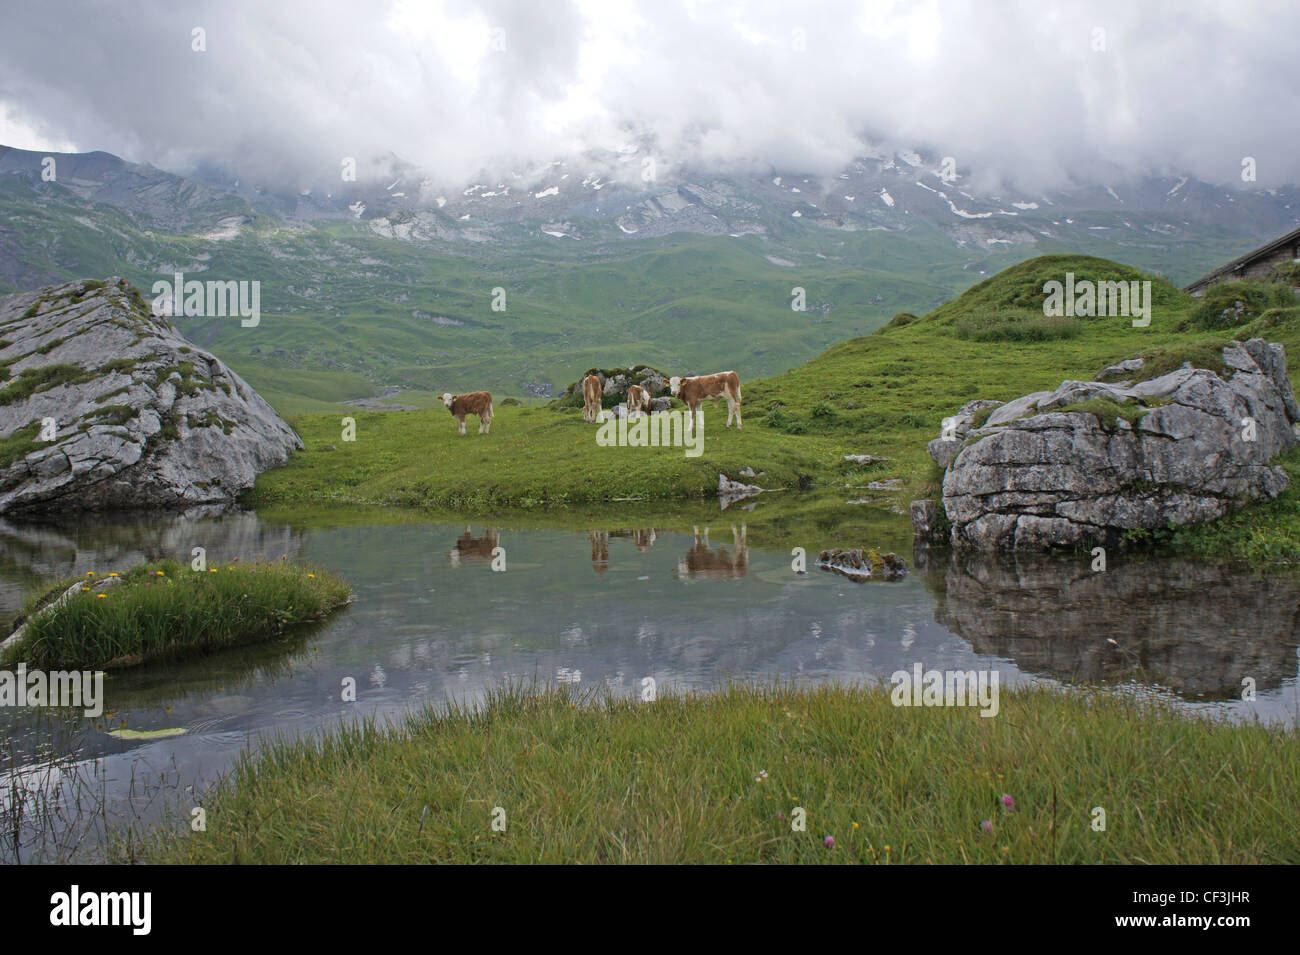 Cattle grazing on alpine pasture, Engstligenalp, Bernese alps, Switzerland Stock Photo